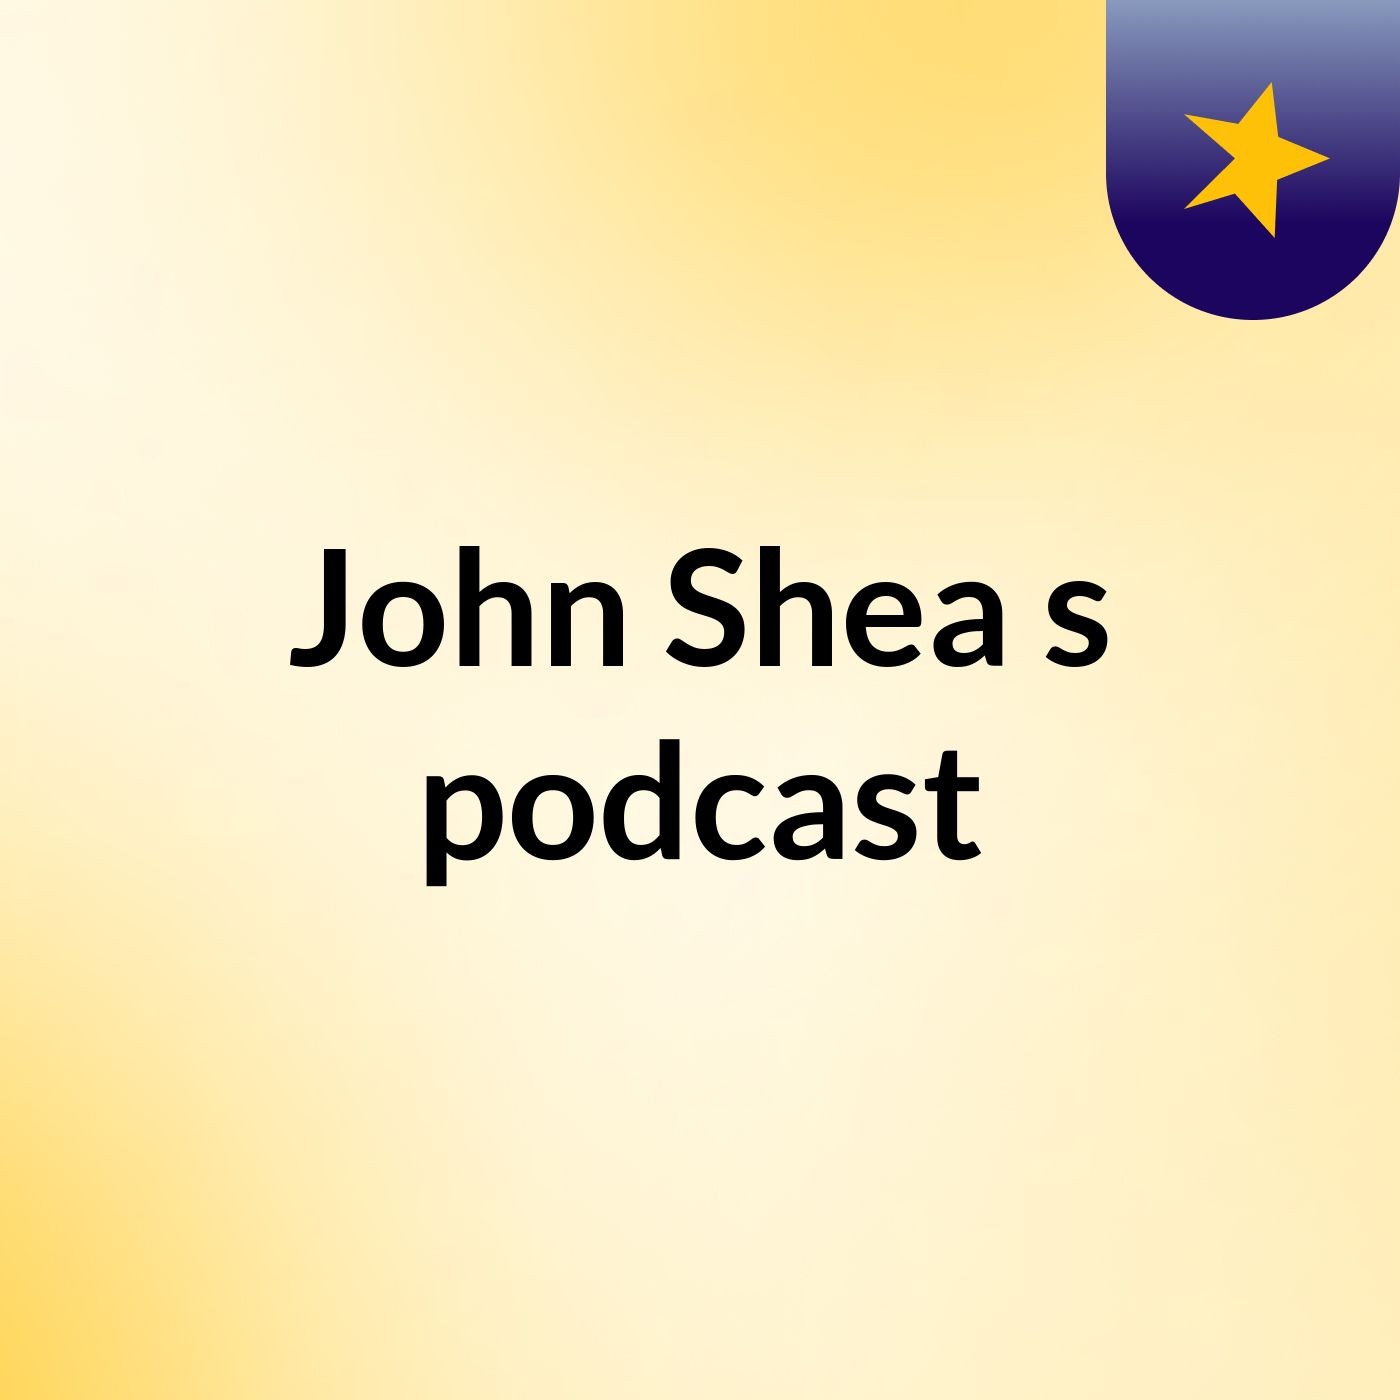 John Shea's podcast